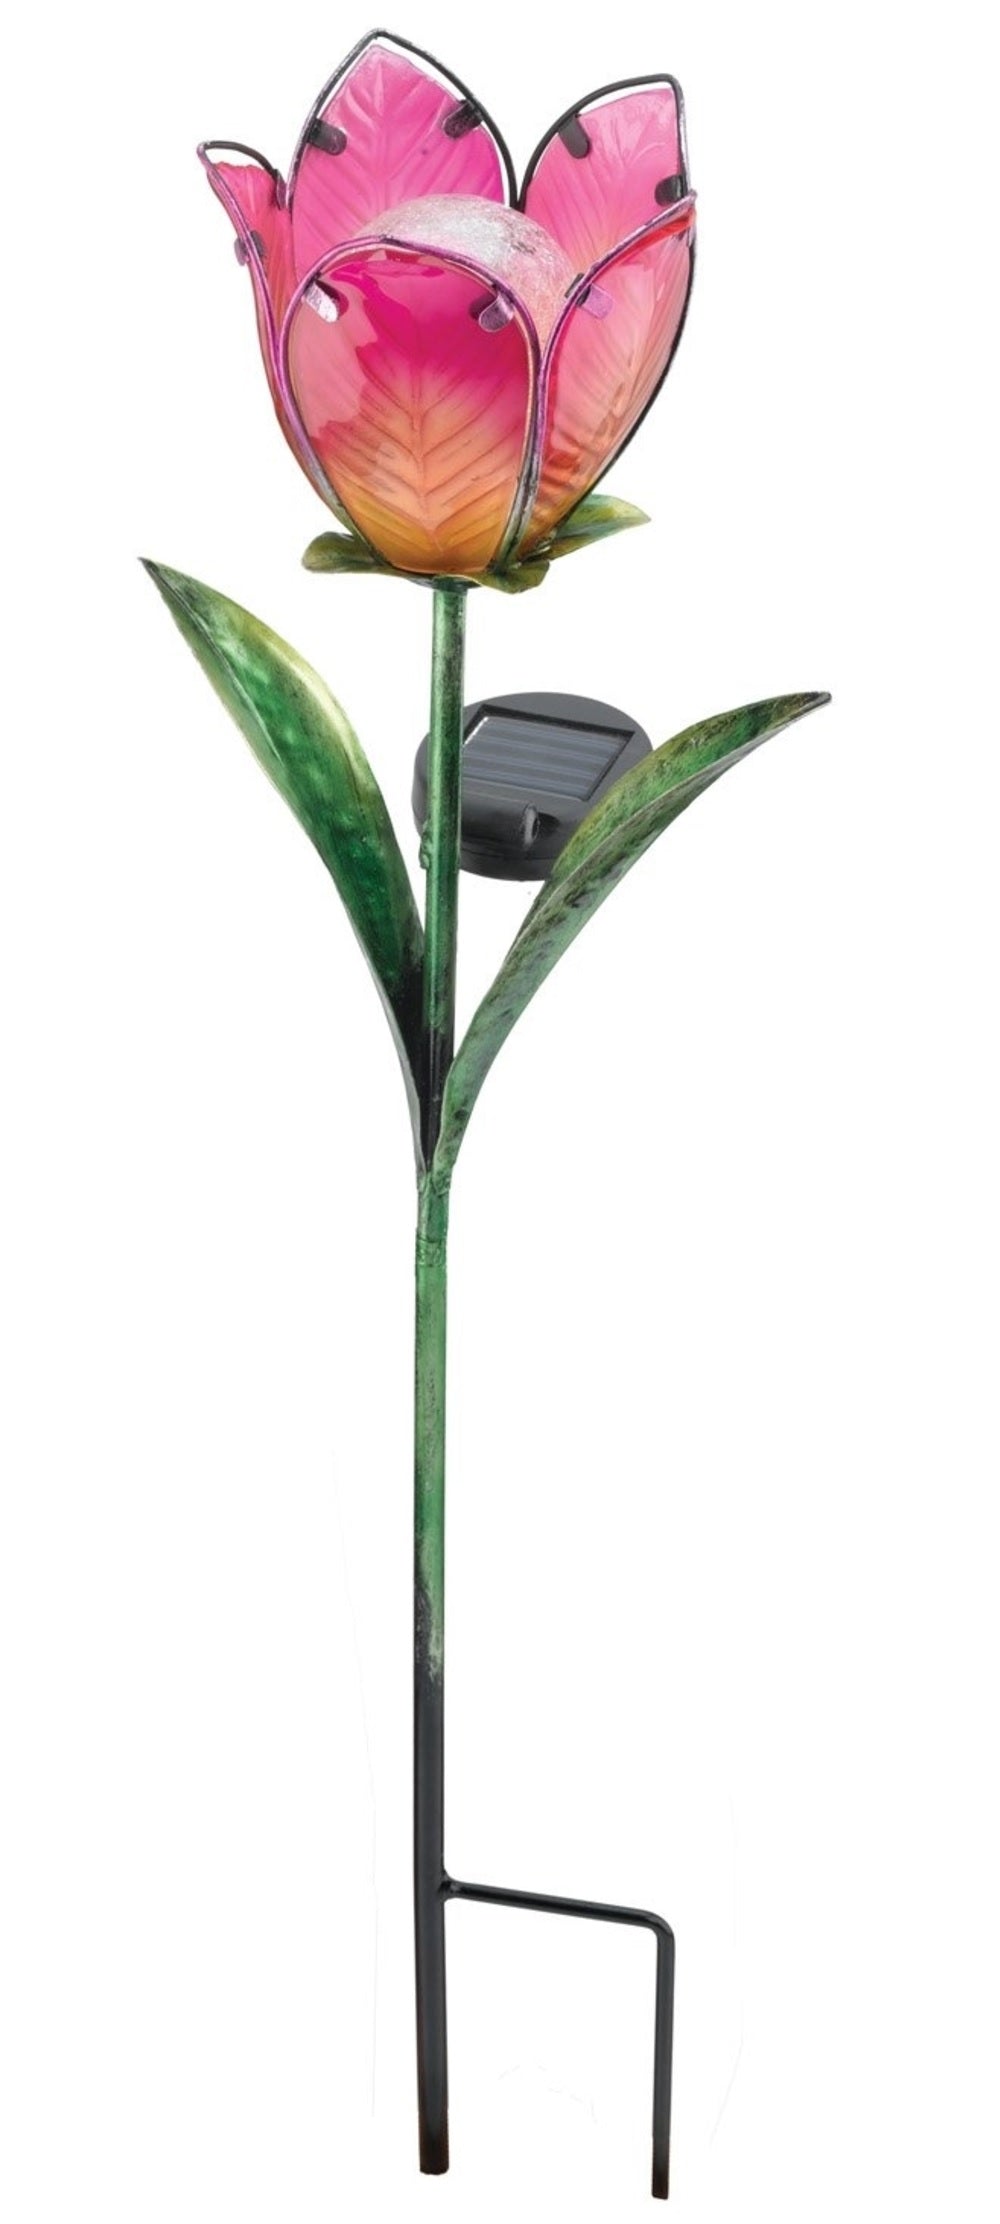 Regal Art & Gift 10559 Solar Tulip Garden Stake, 23.75", Multi-Color